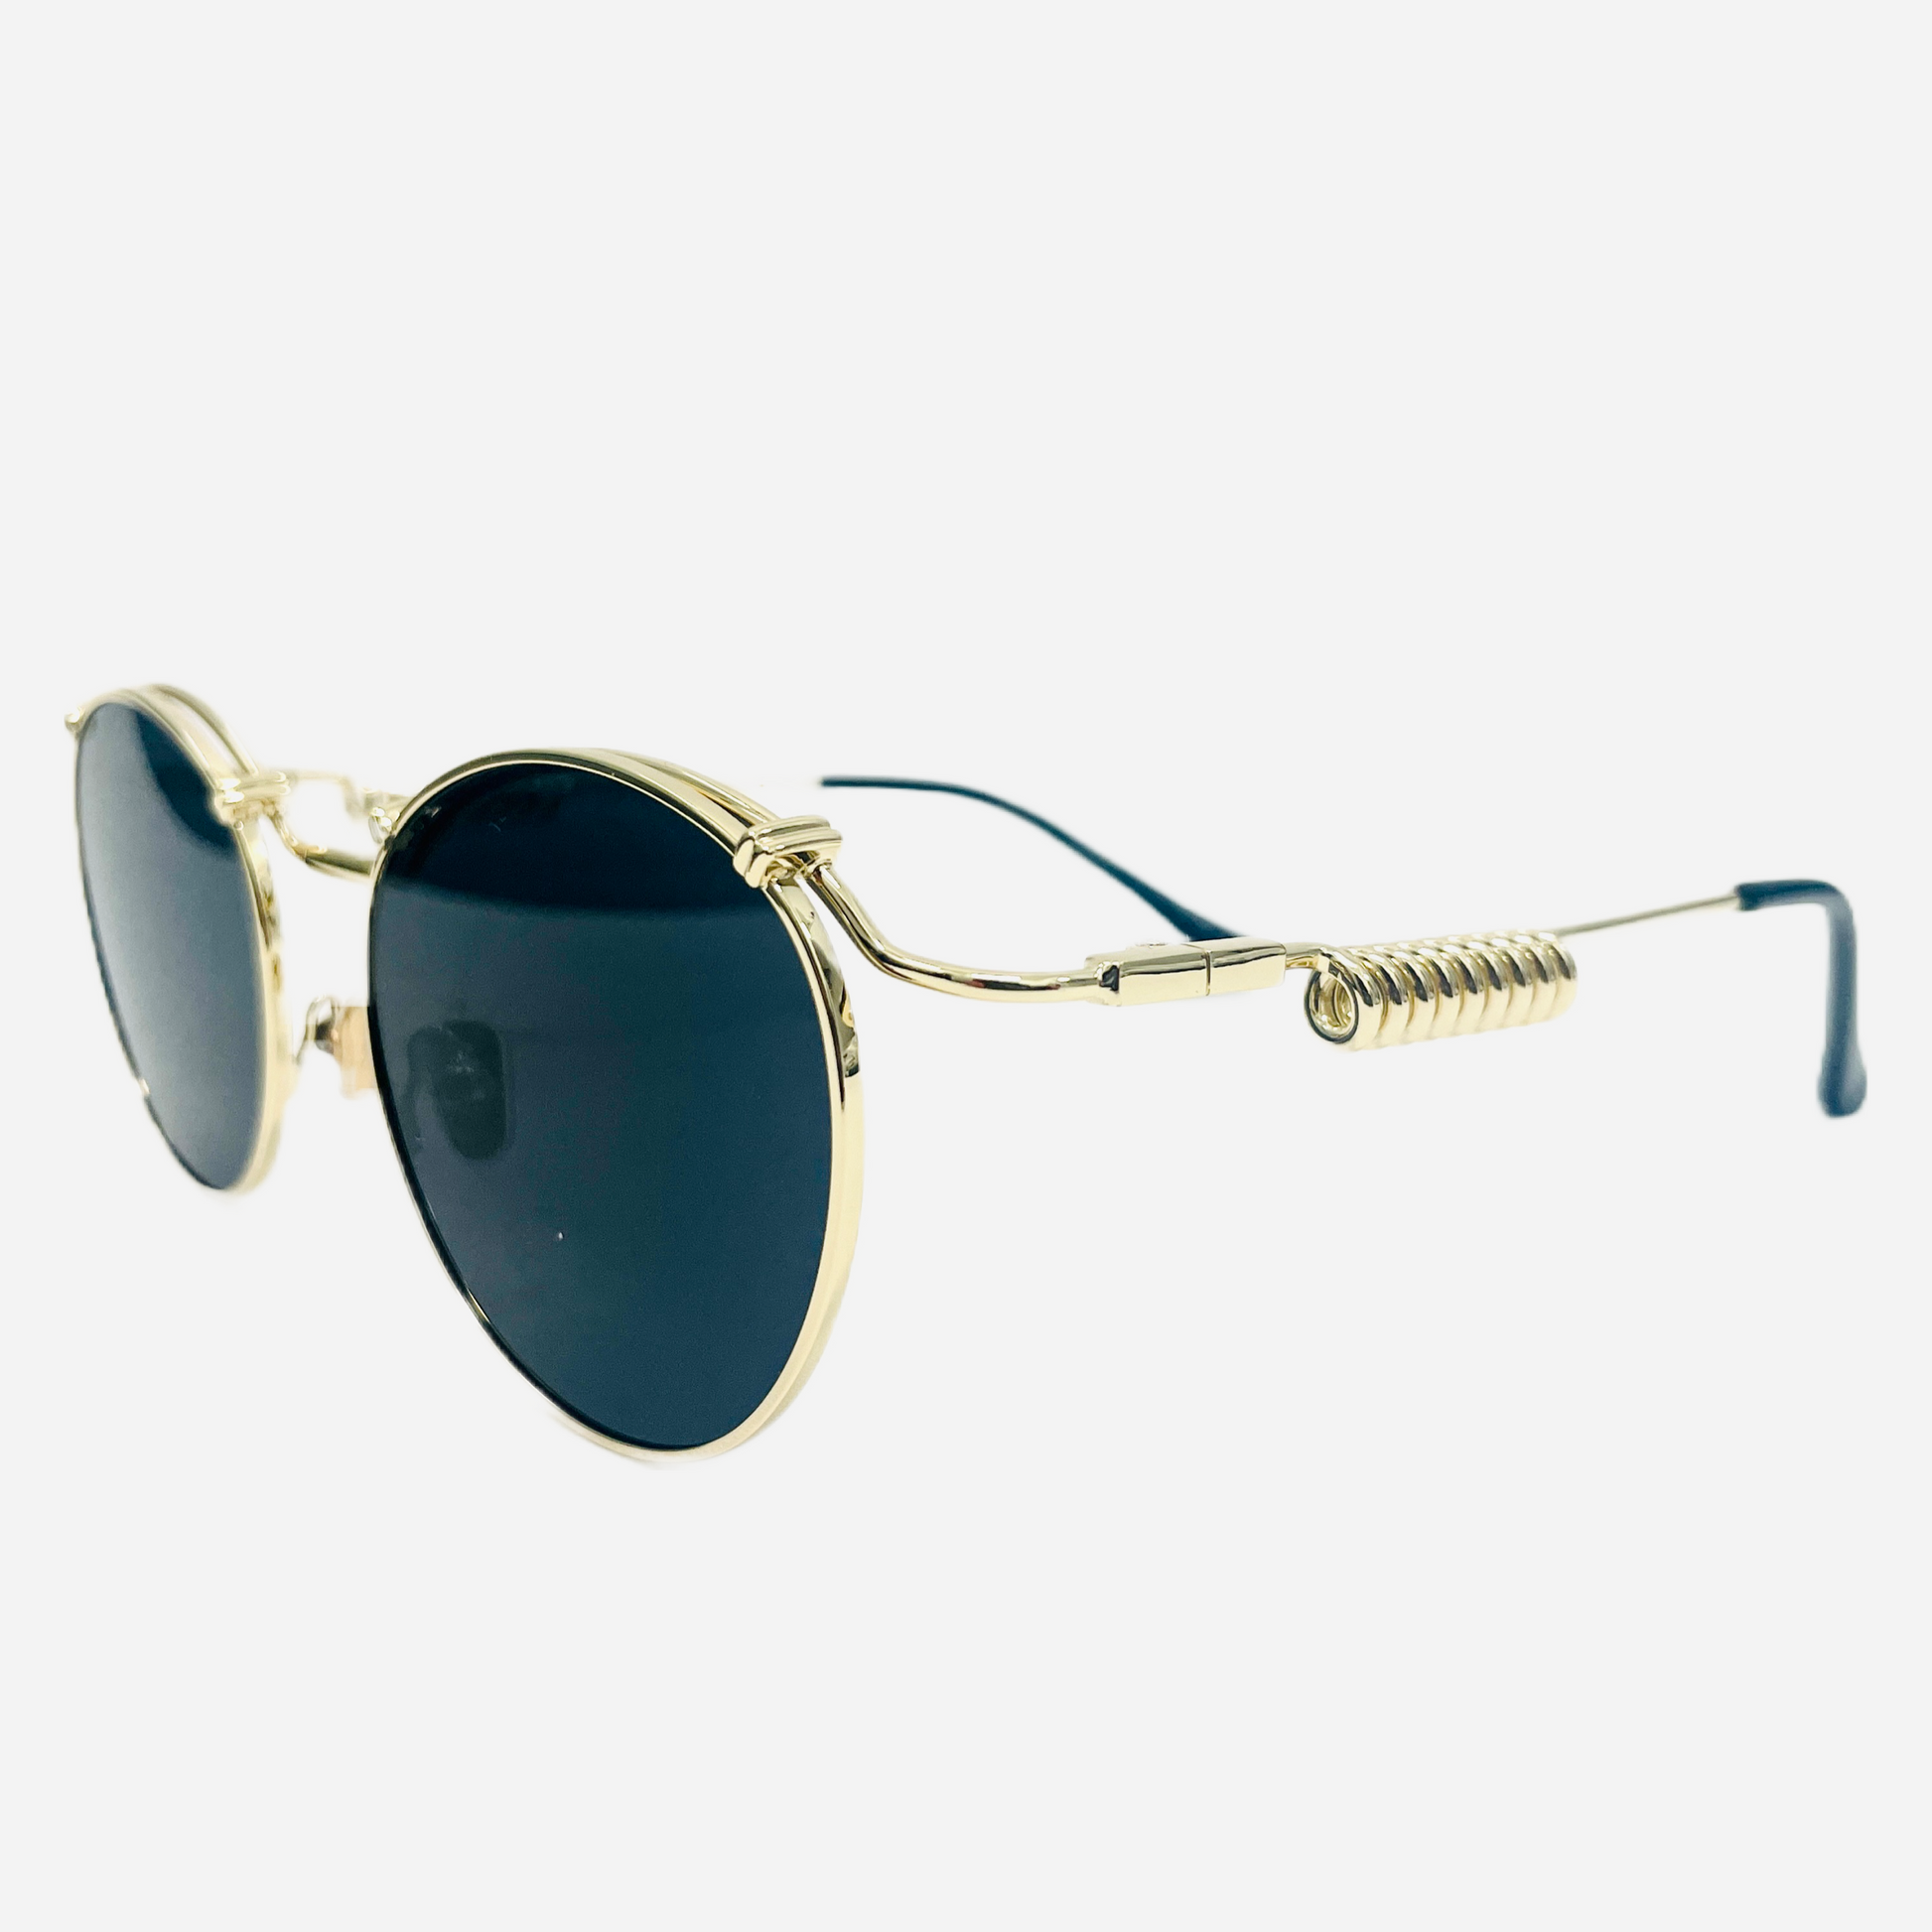 Vintage-Jean-Paul-Gaultier-Sonnenbrille-Sunglasses-Model-56-9174-gold-side